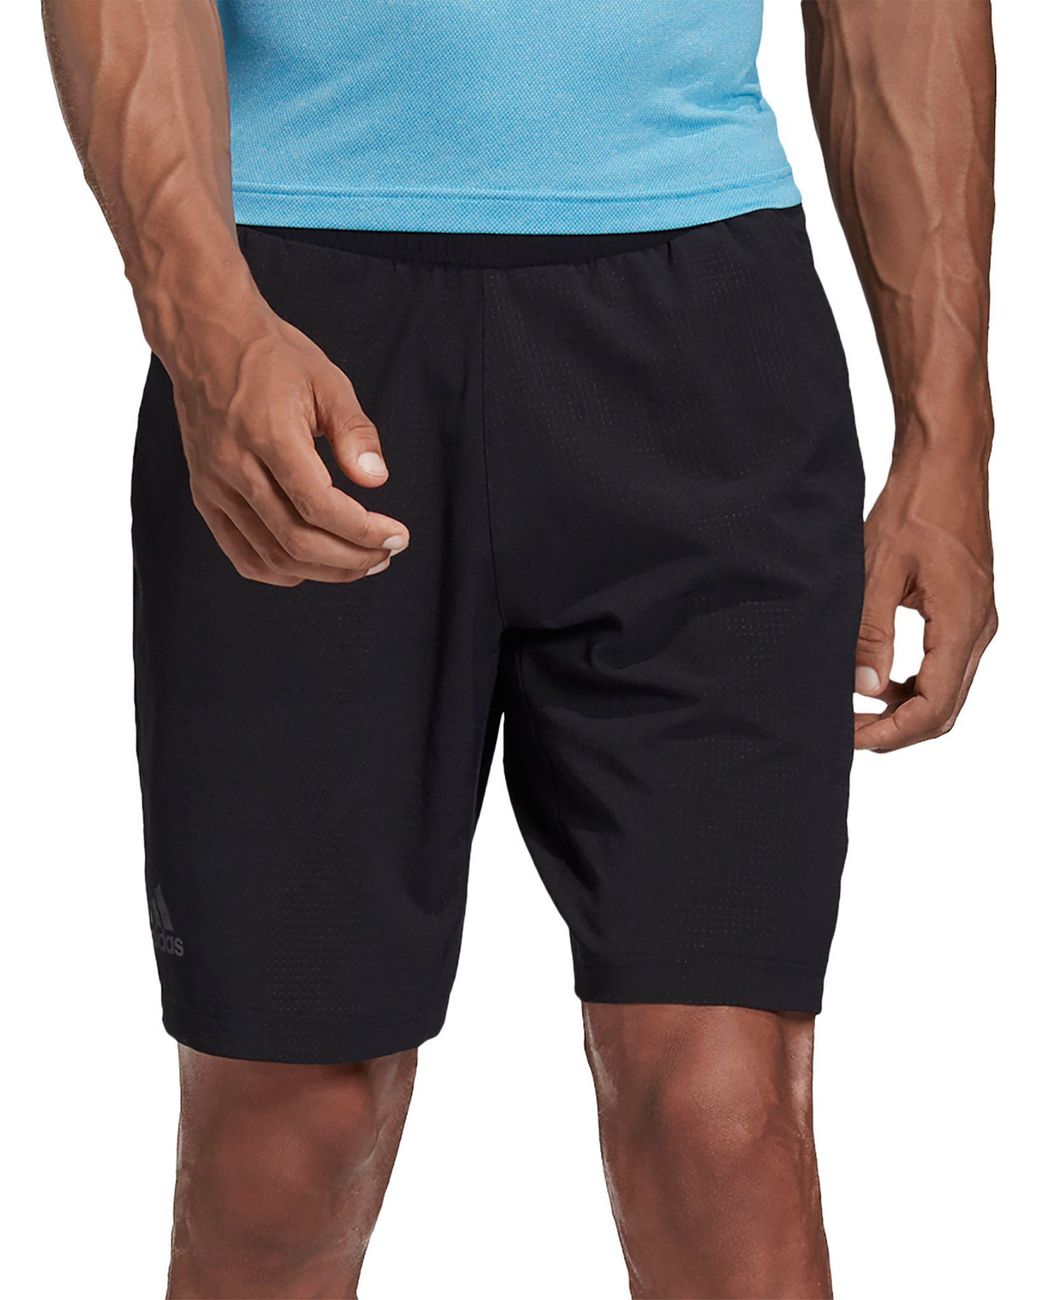 adidas Ergo Tennis Shorts in Black for Men - Lyst